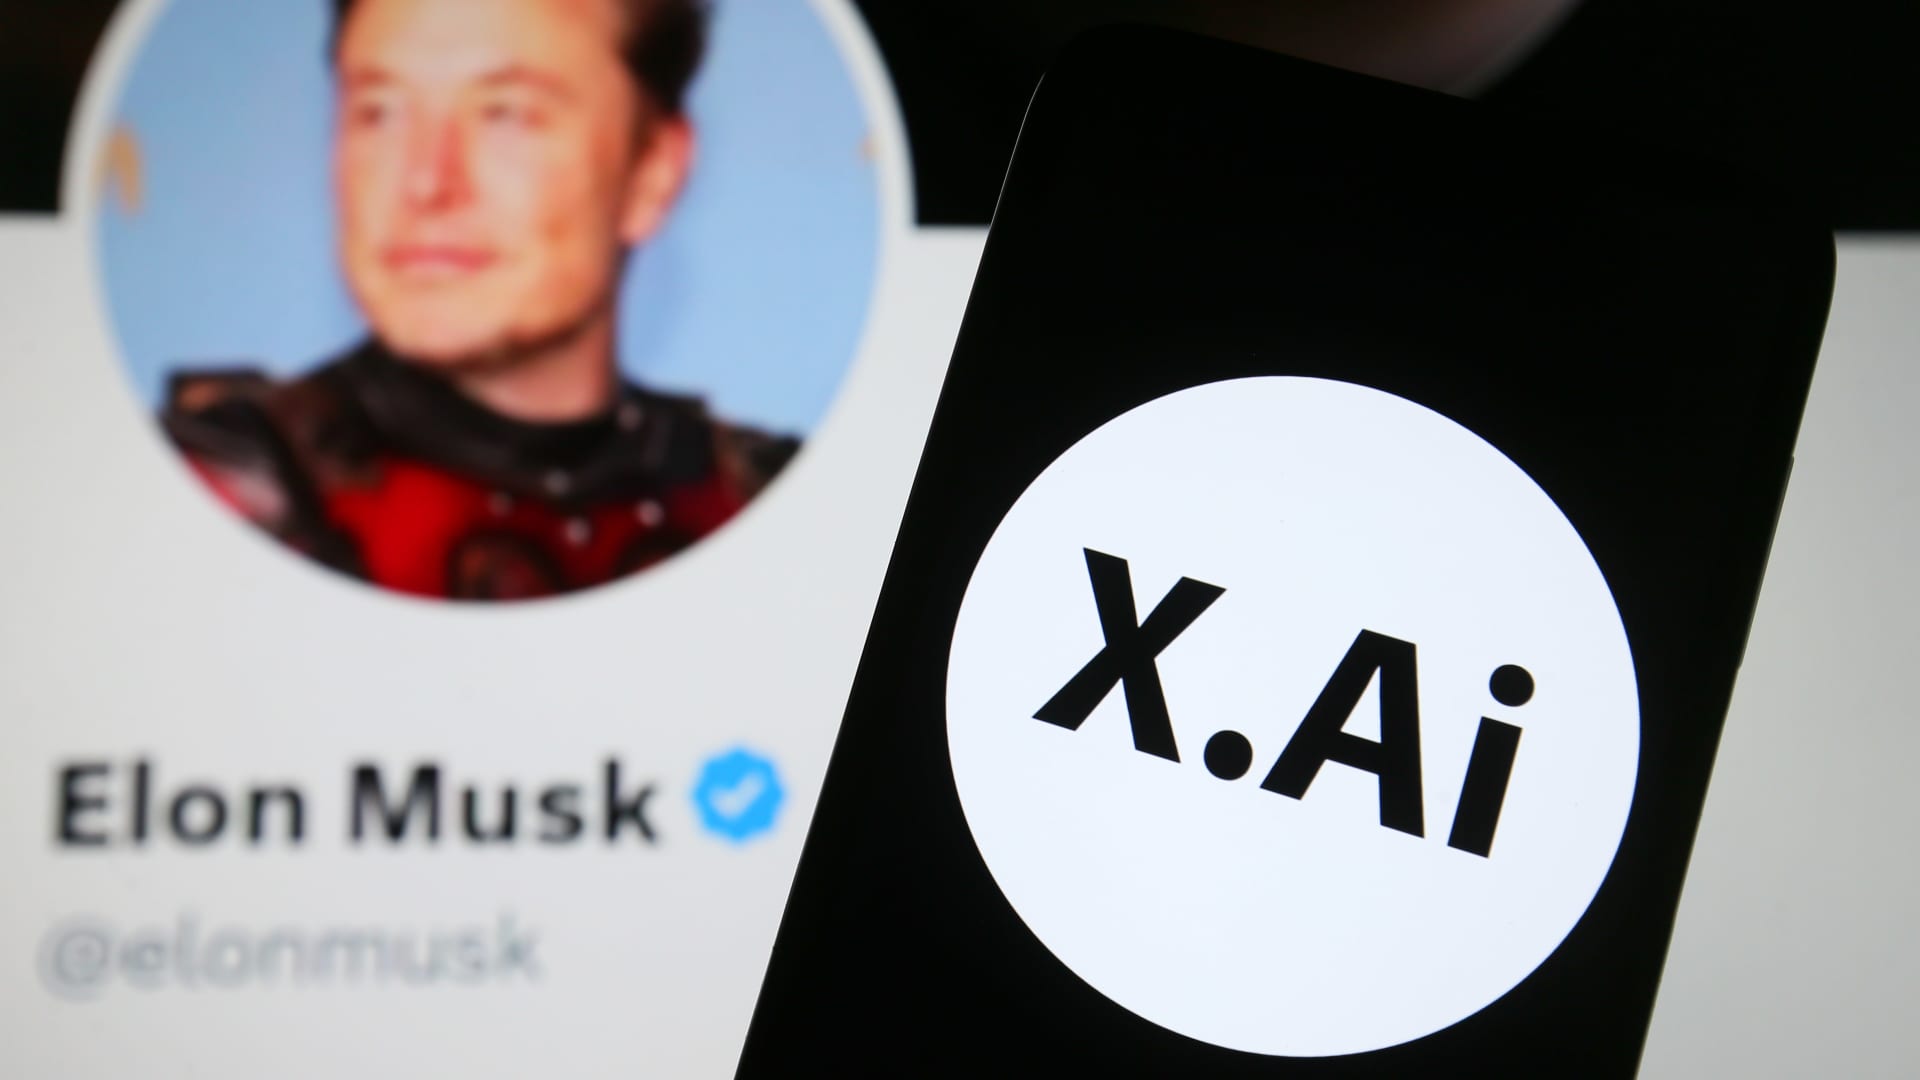 Elon Musk launches his new company, xAI